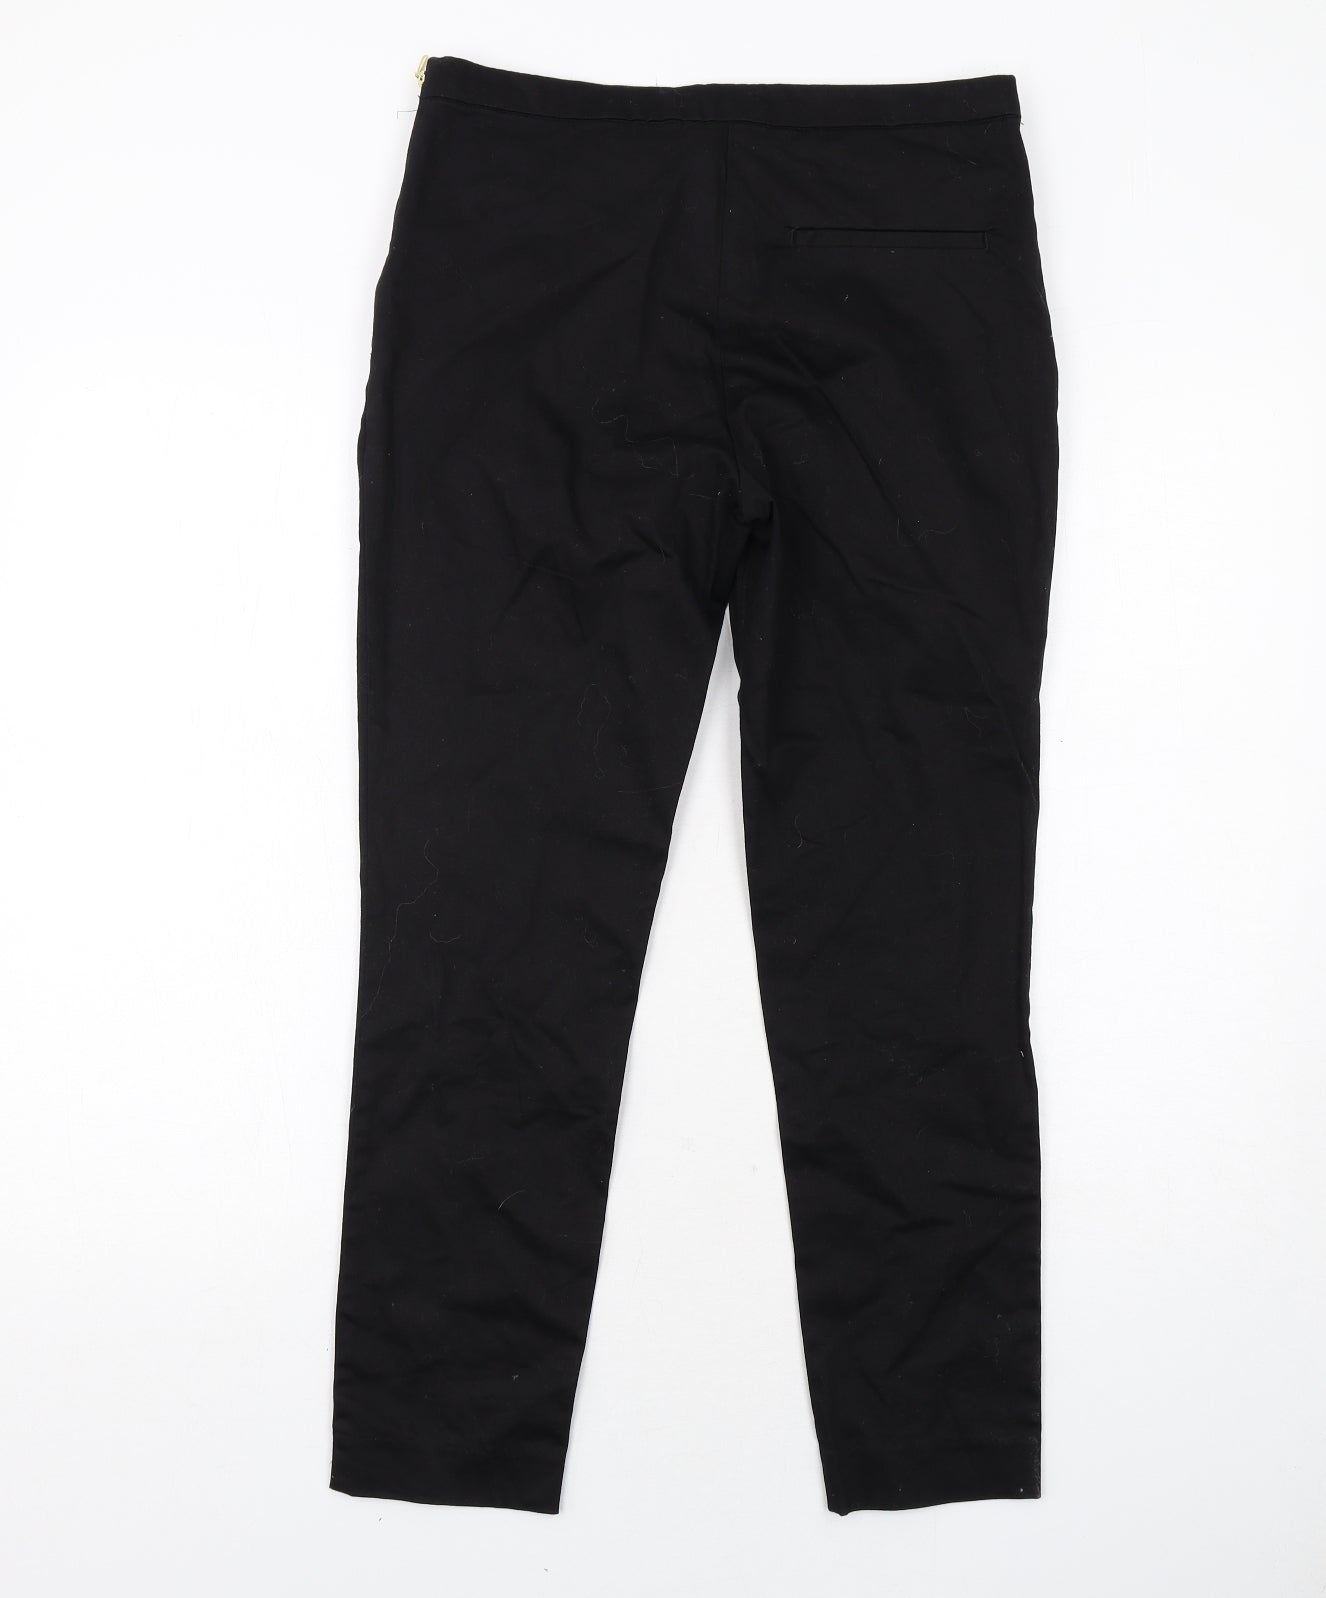 H&M Womens Black Cotton Capri Trousers Size 10 Regular Zip